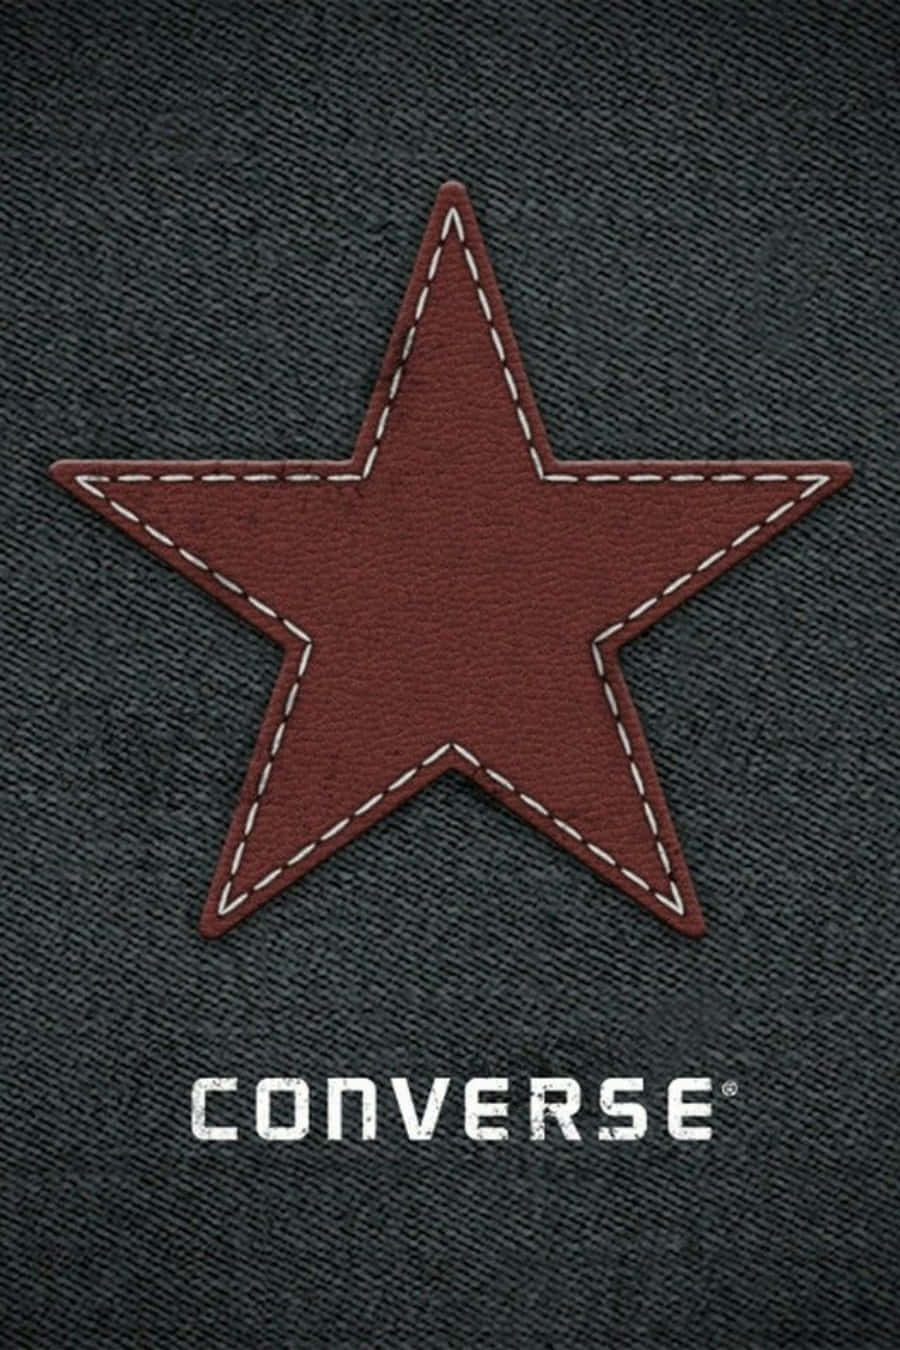 Classic converse logo